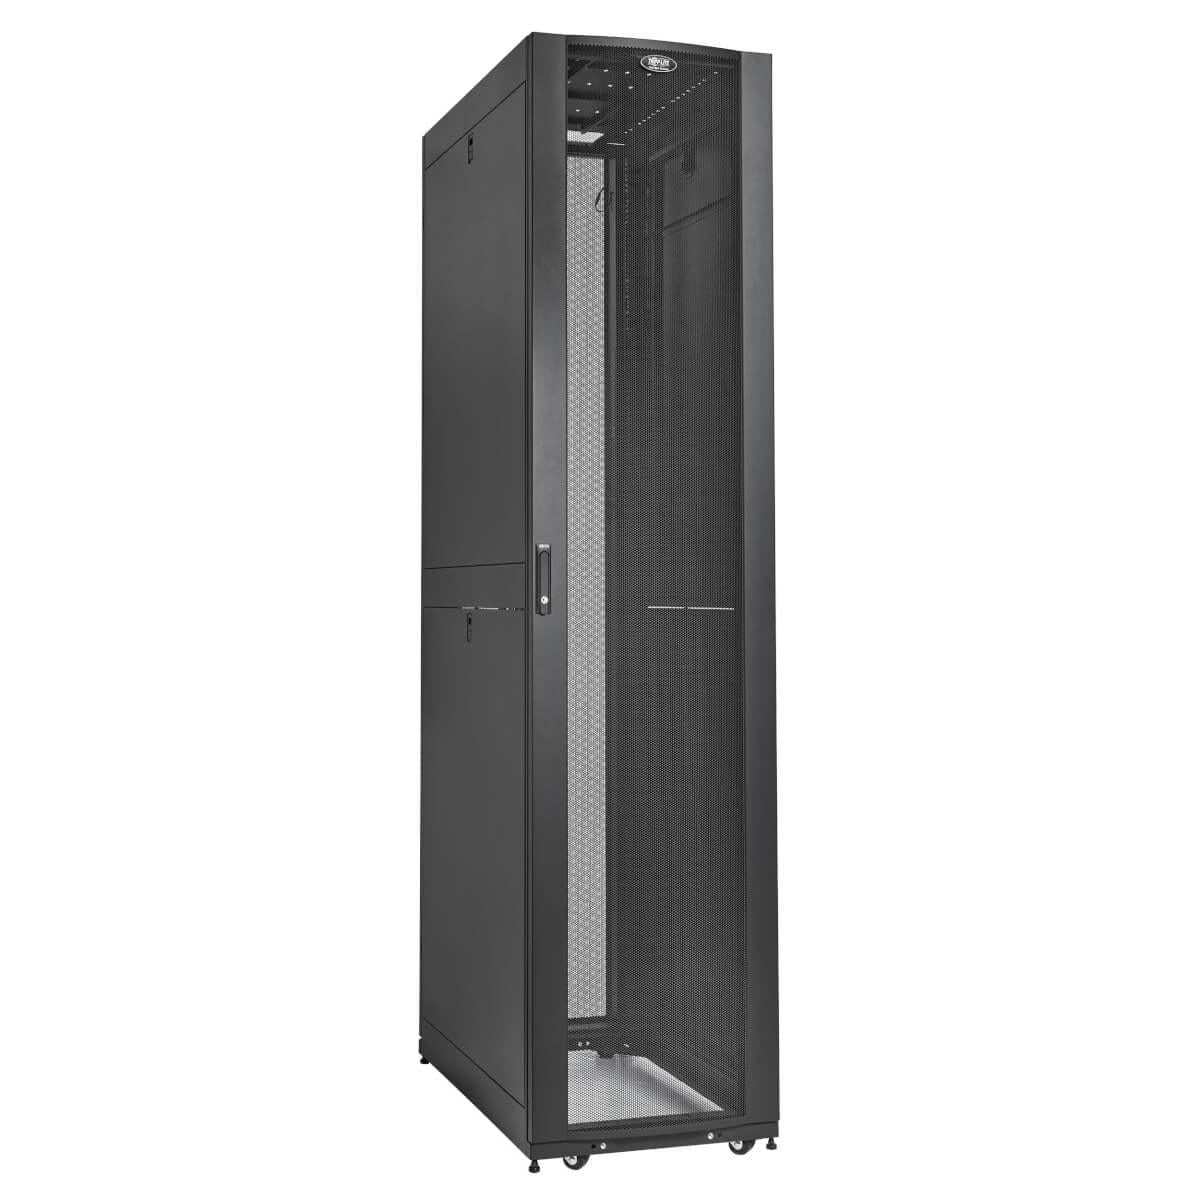 Tripp Lite Sr52Ub Smartrack Premium 52U Standard-Depth Rack Enclosure Cabinet